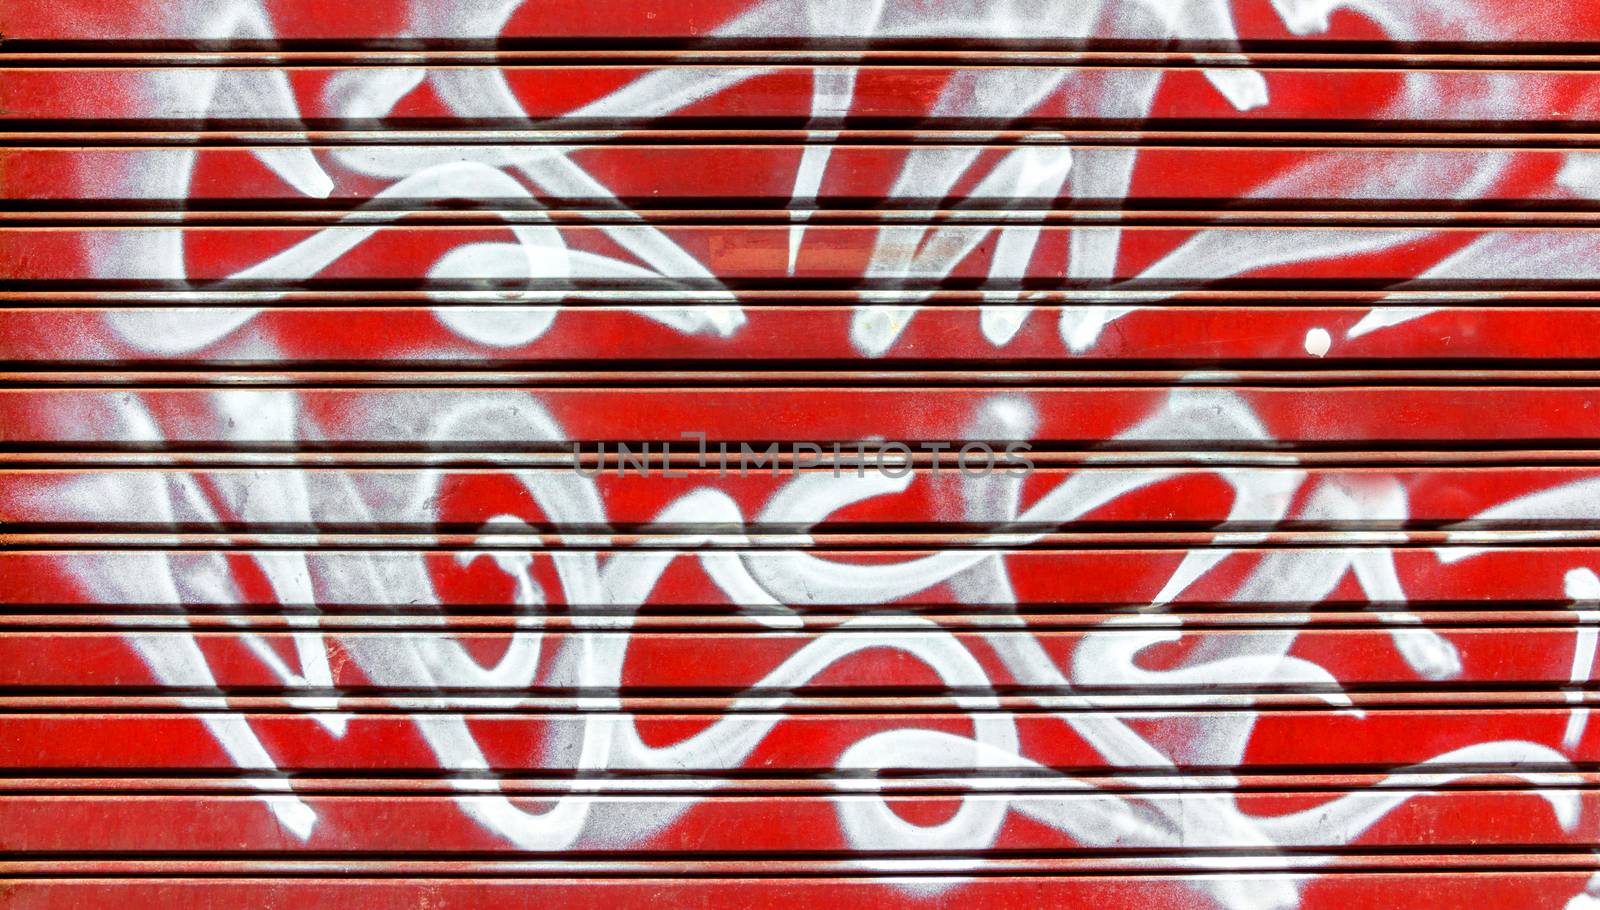 Red garage gate with graffiti by germanopoli